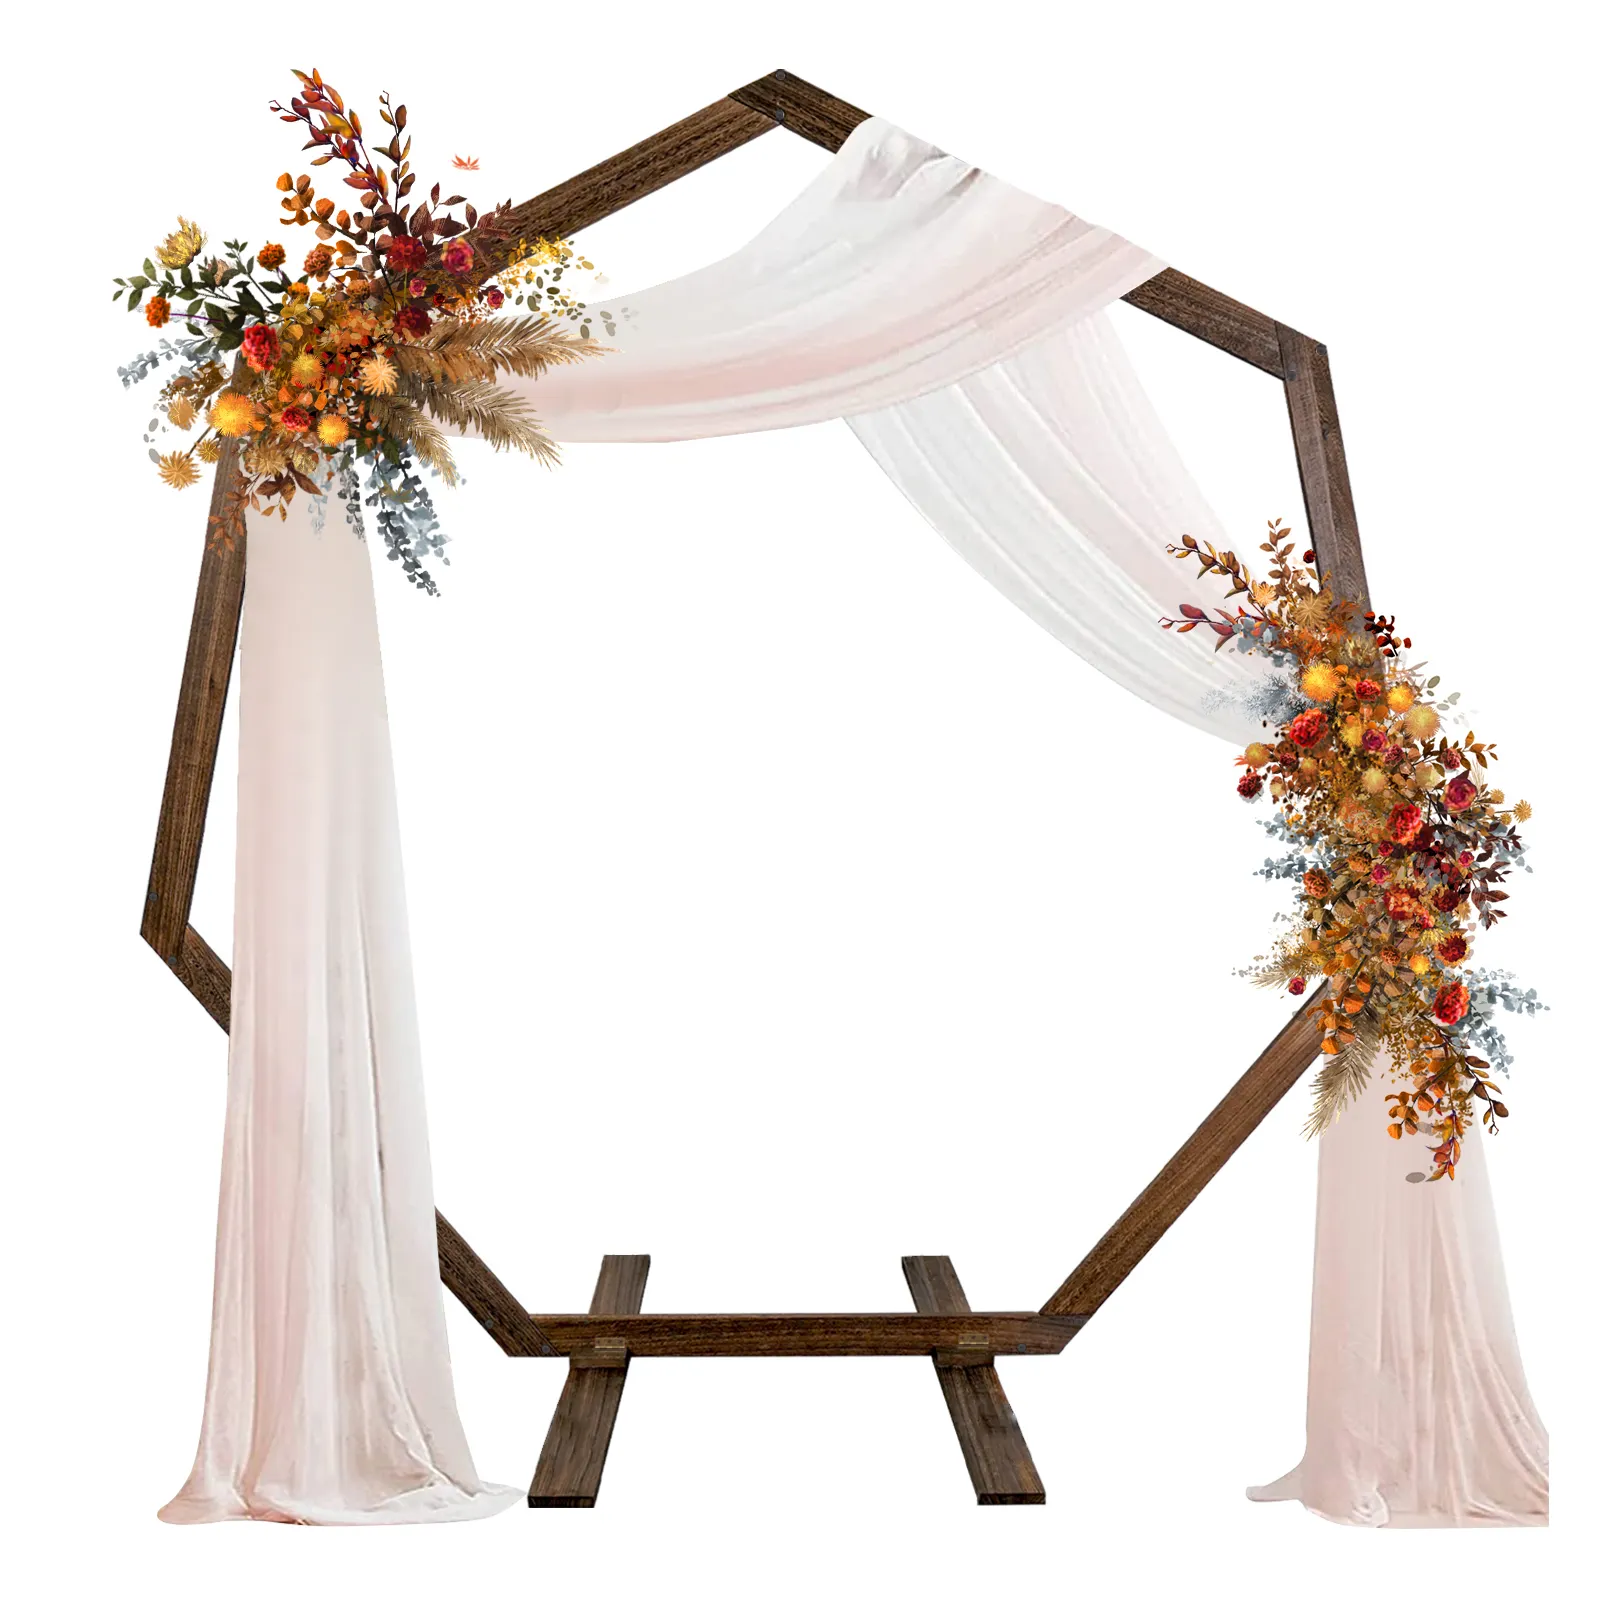 Customized Wooden Wedding Arch 7 ft Heptagonal Garden Wood Wedding Arch Arbor Rustic Farmhouse Theme